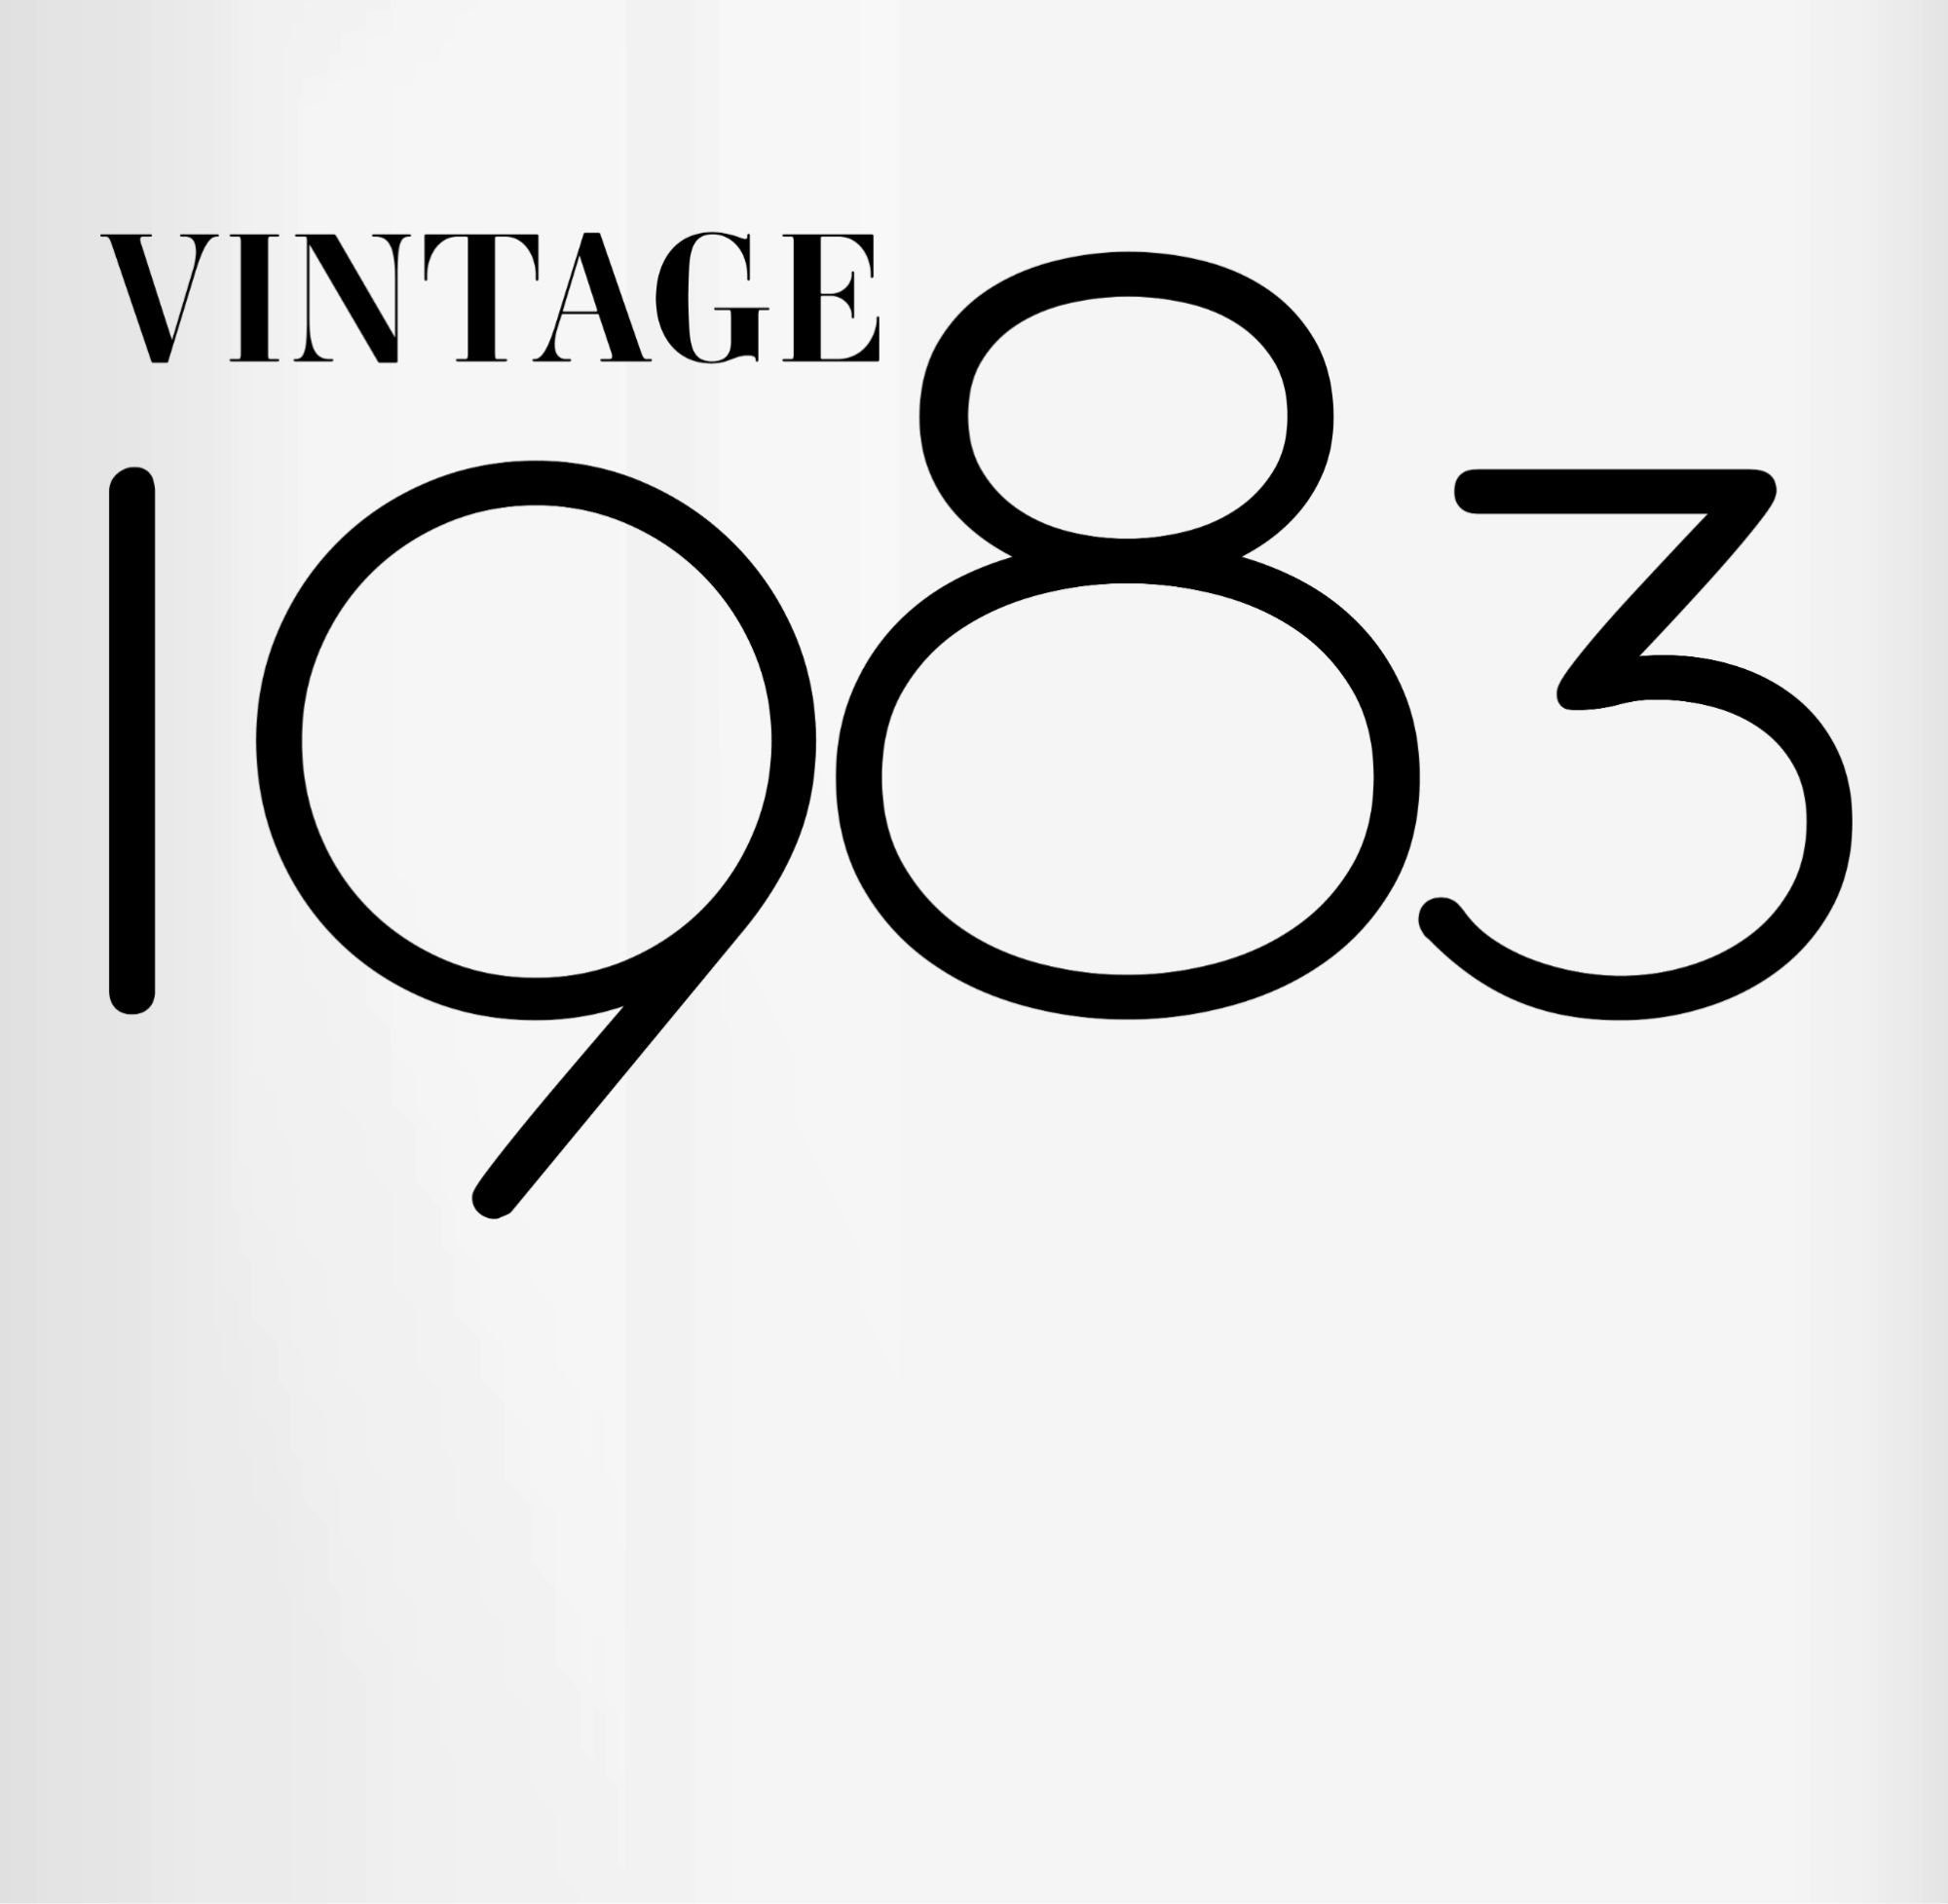 3 1983 schwarz, Geburtstag Keramik, 40. Tasse Bordeauxrot Shirtracer Vintage Tasse